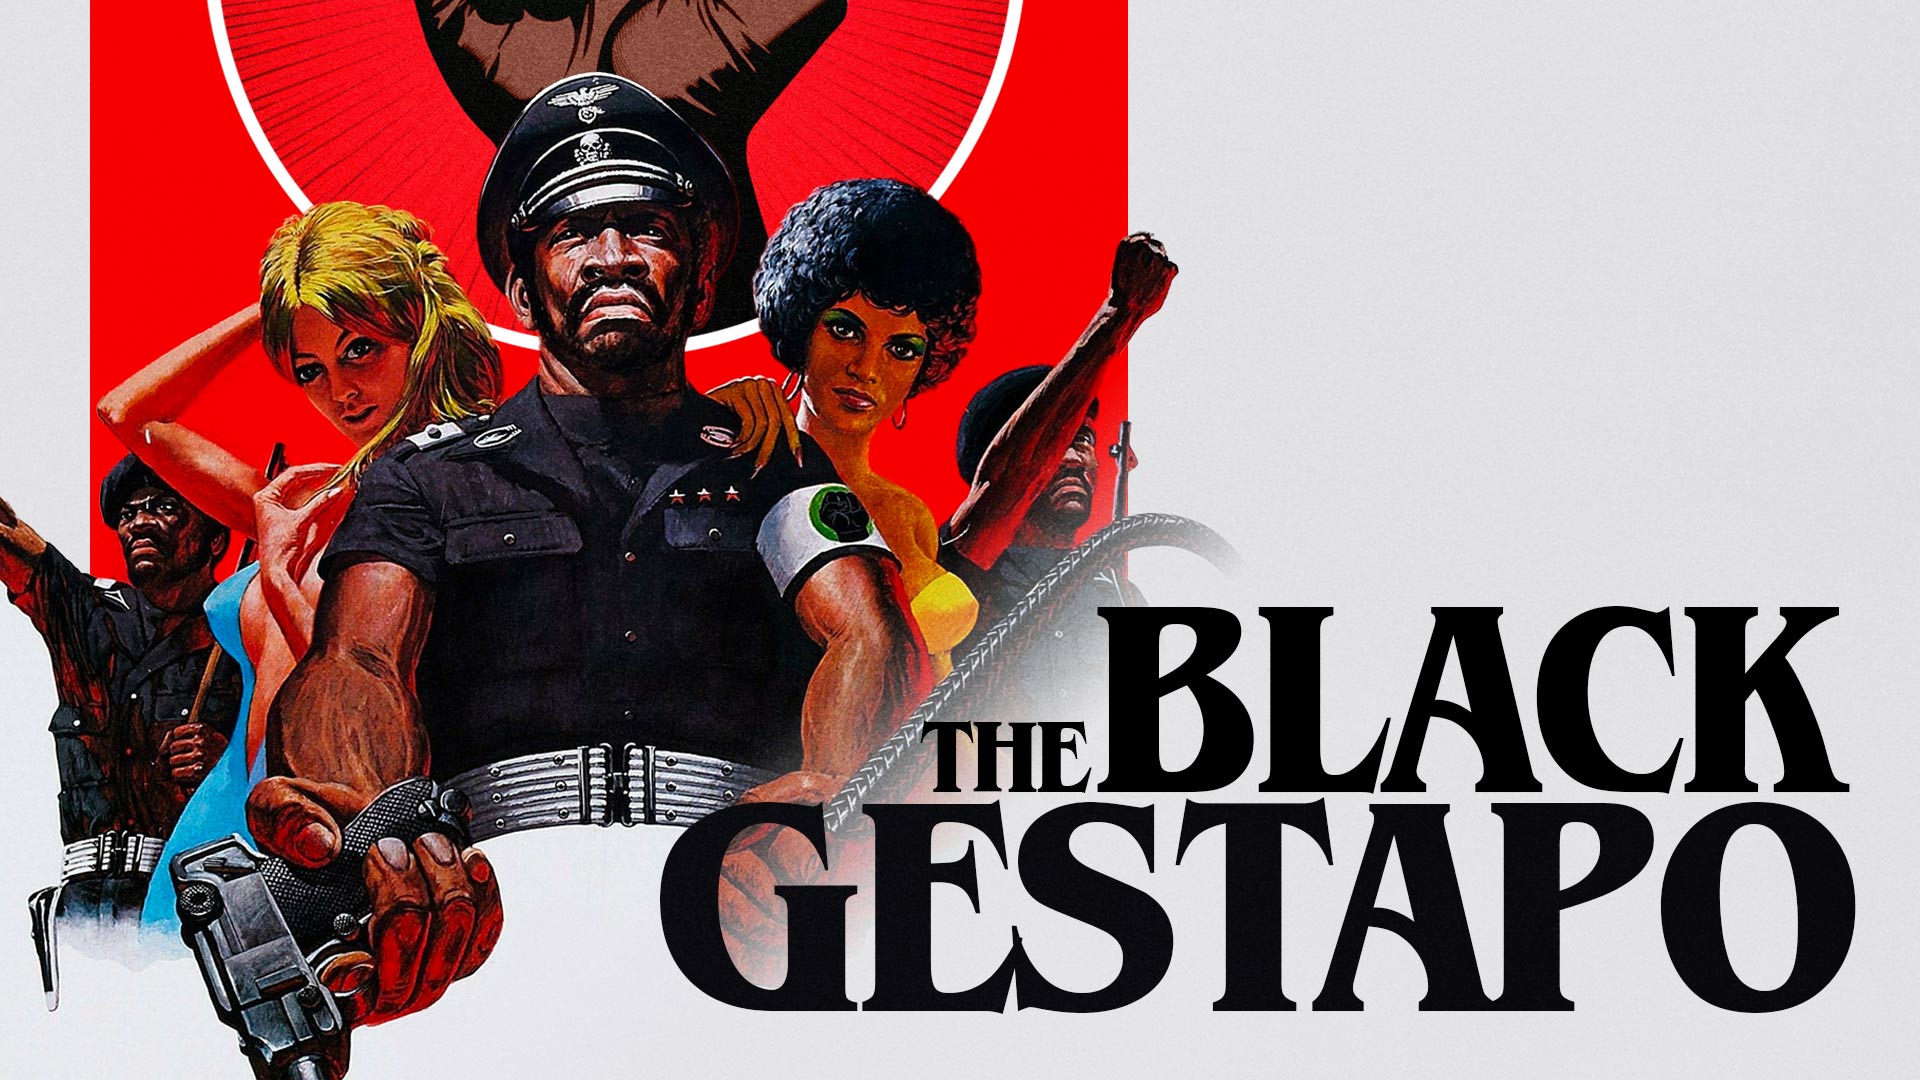 The Black Gestapo | Runtime